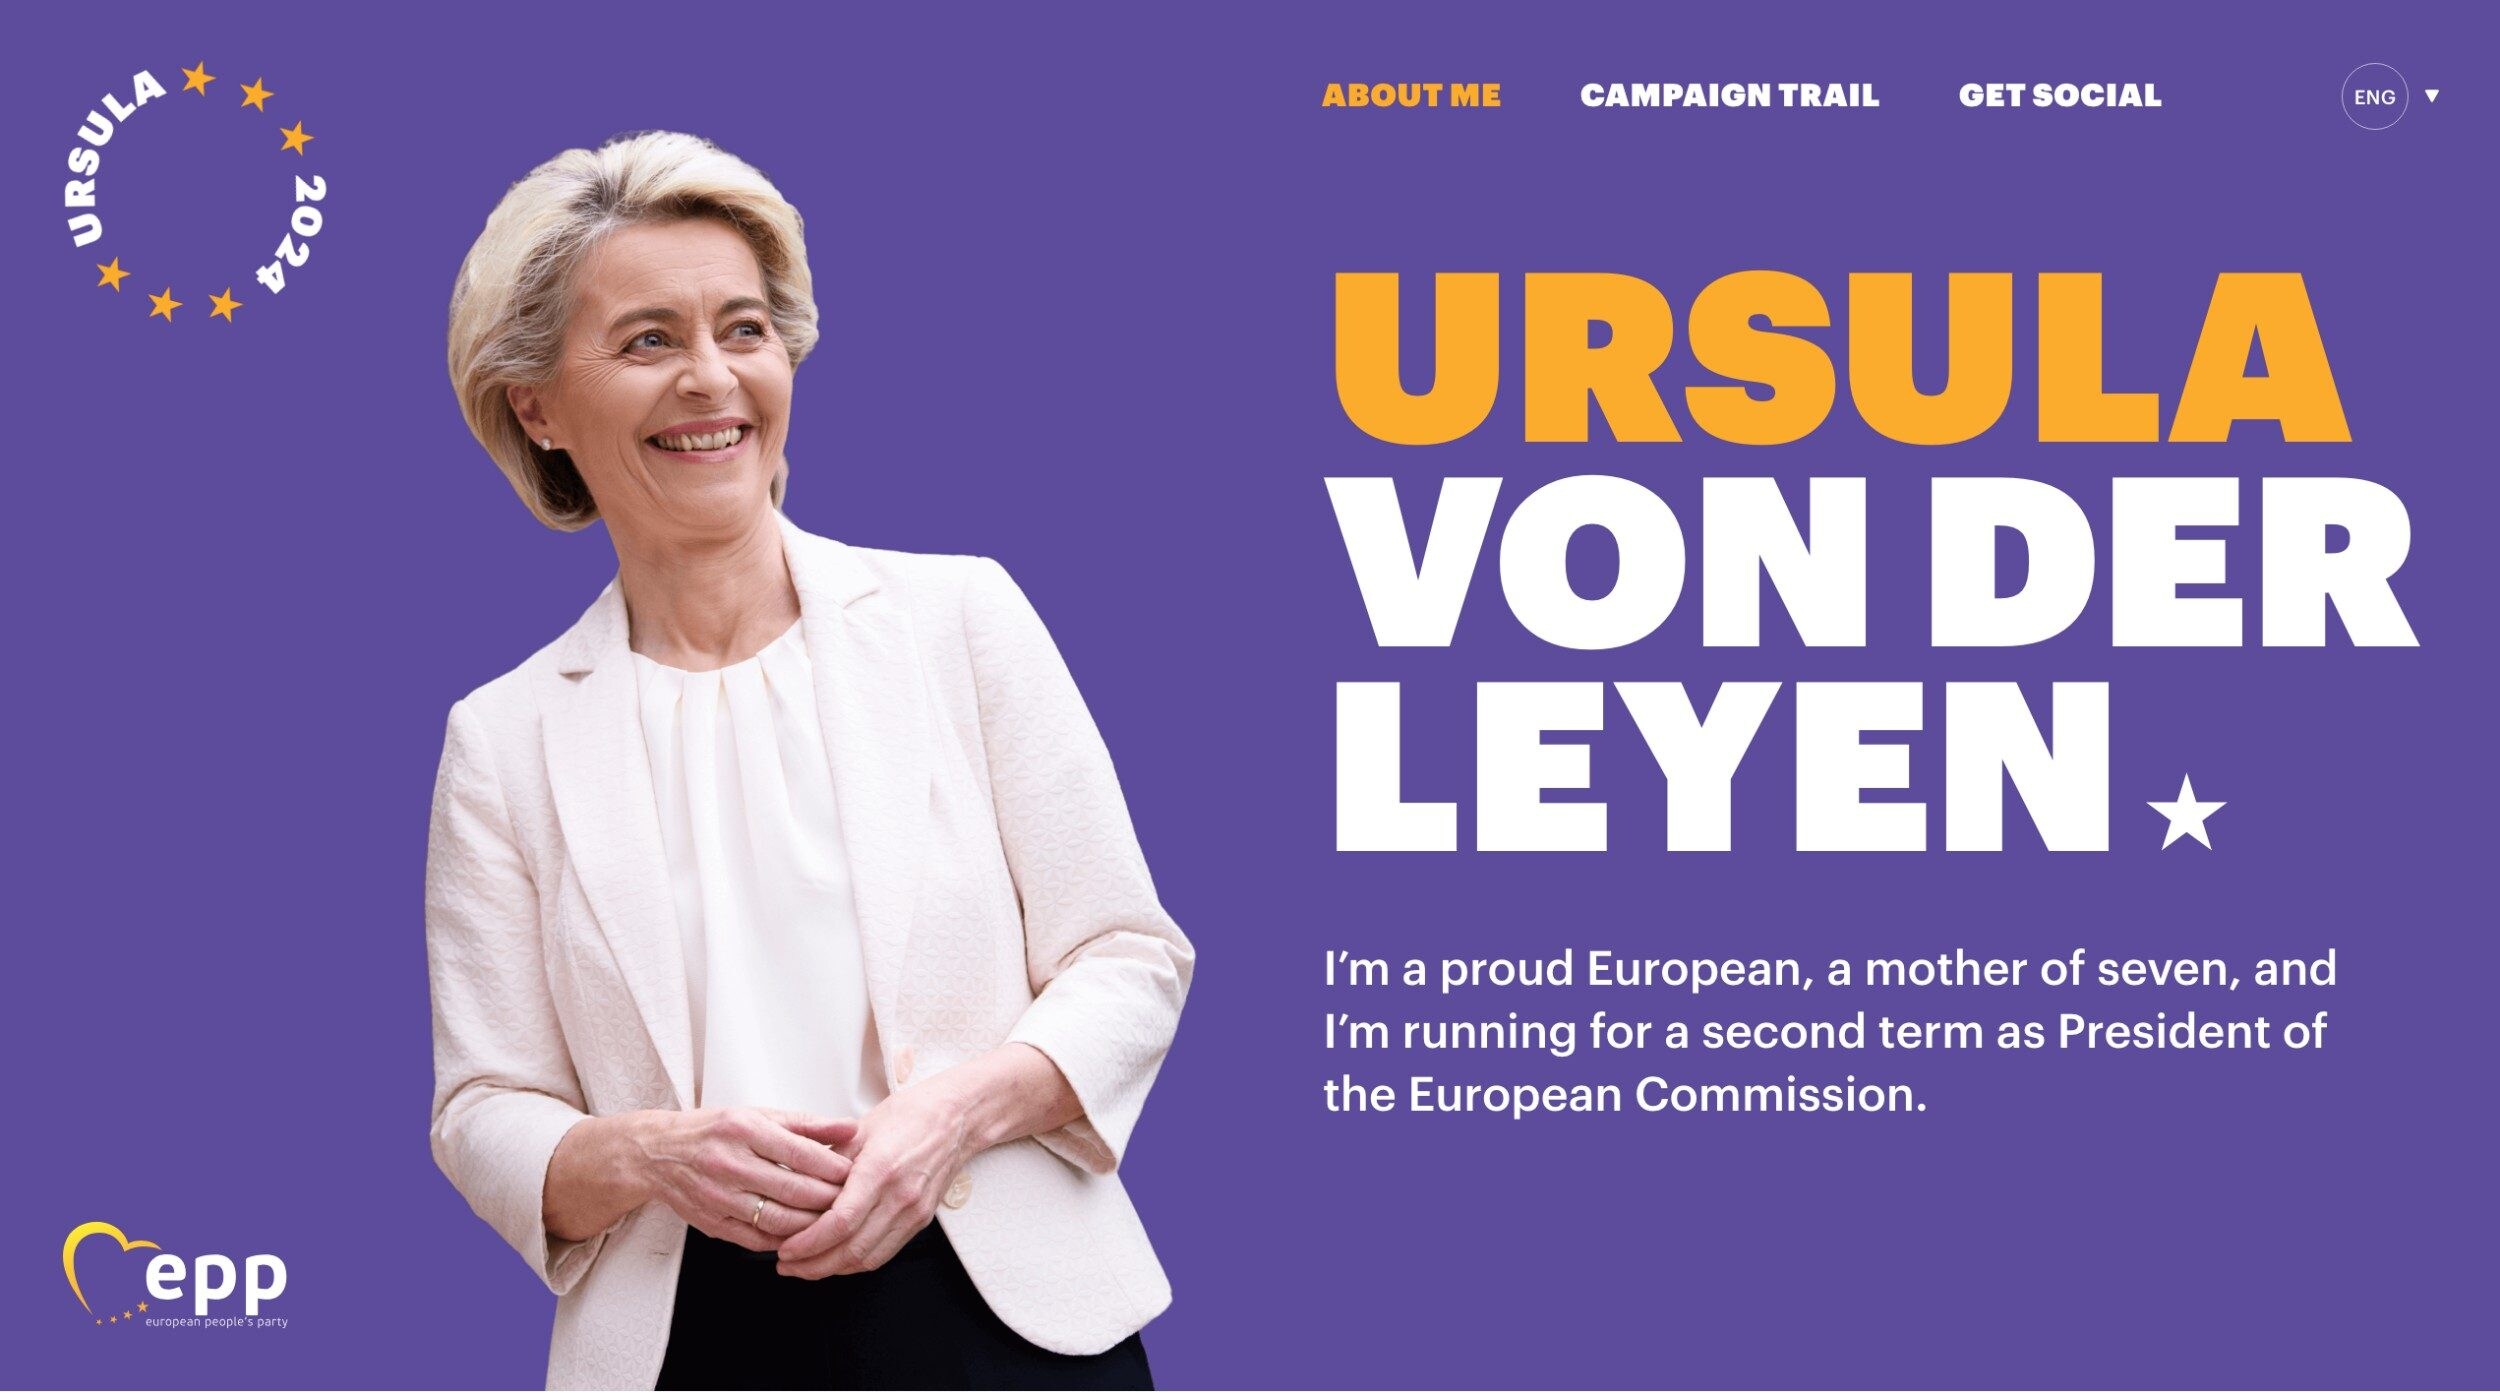 ursula von der leyen gets family-friendly rebrand ahead of elections